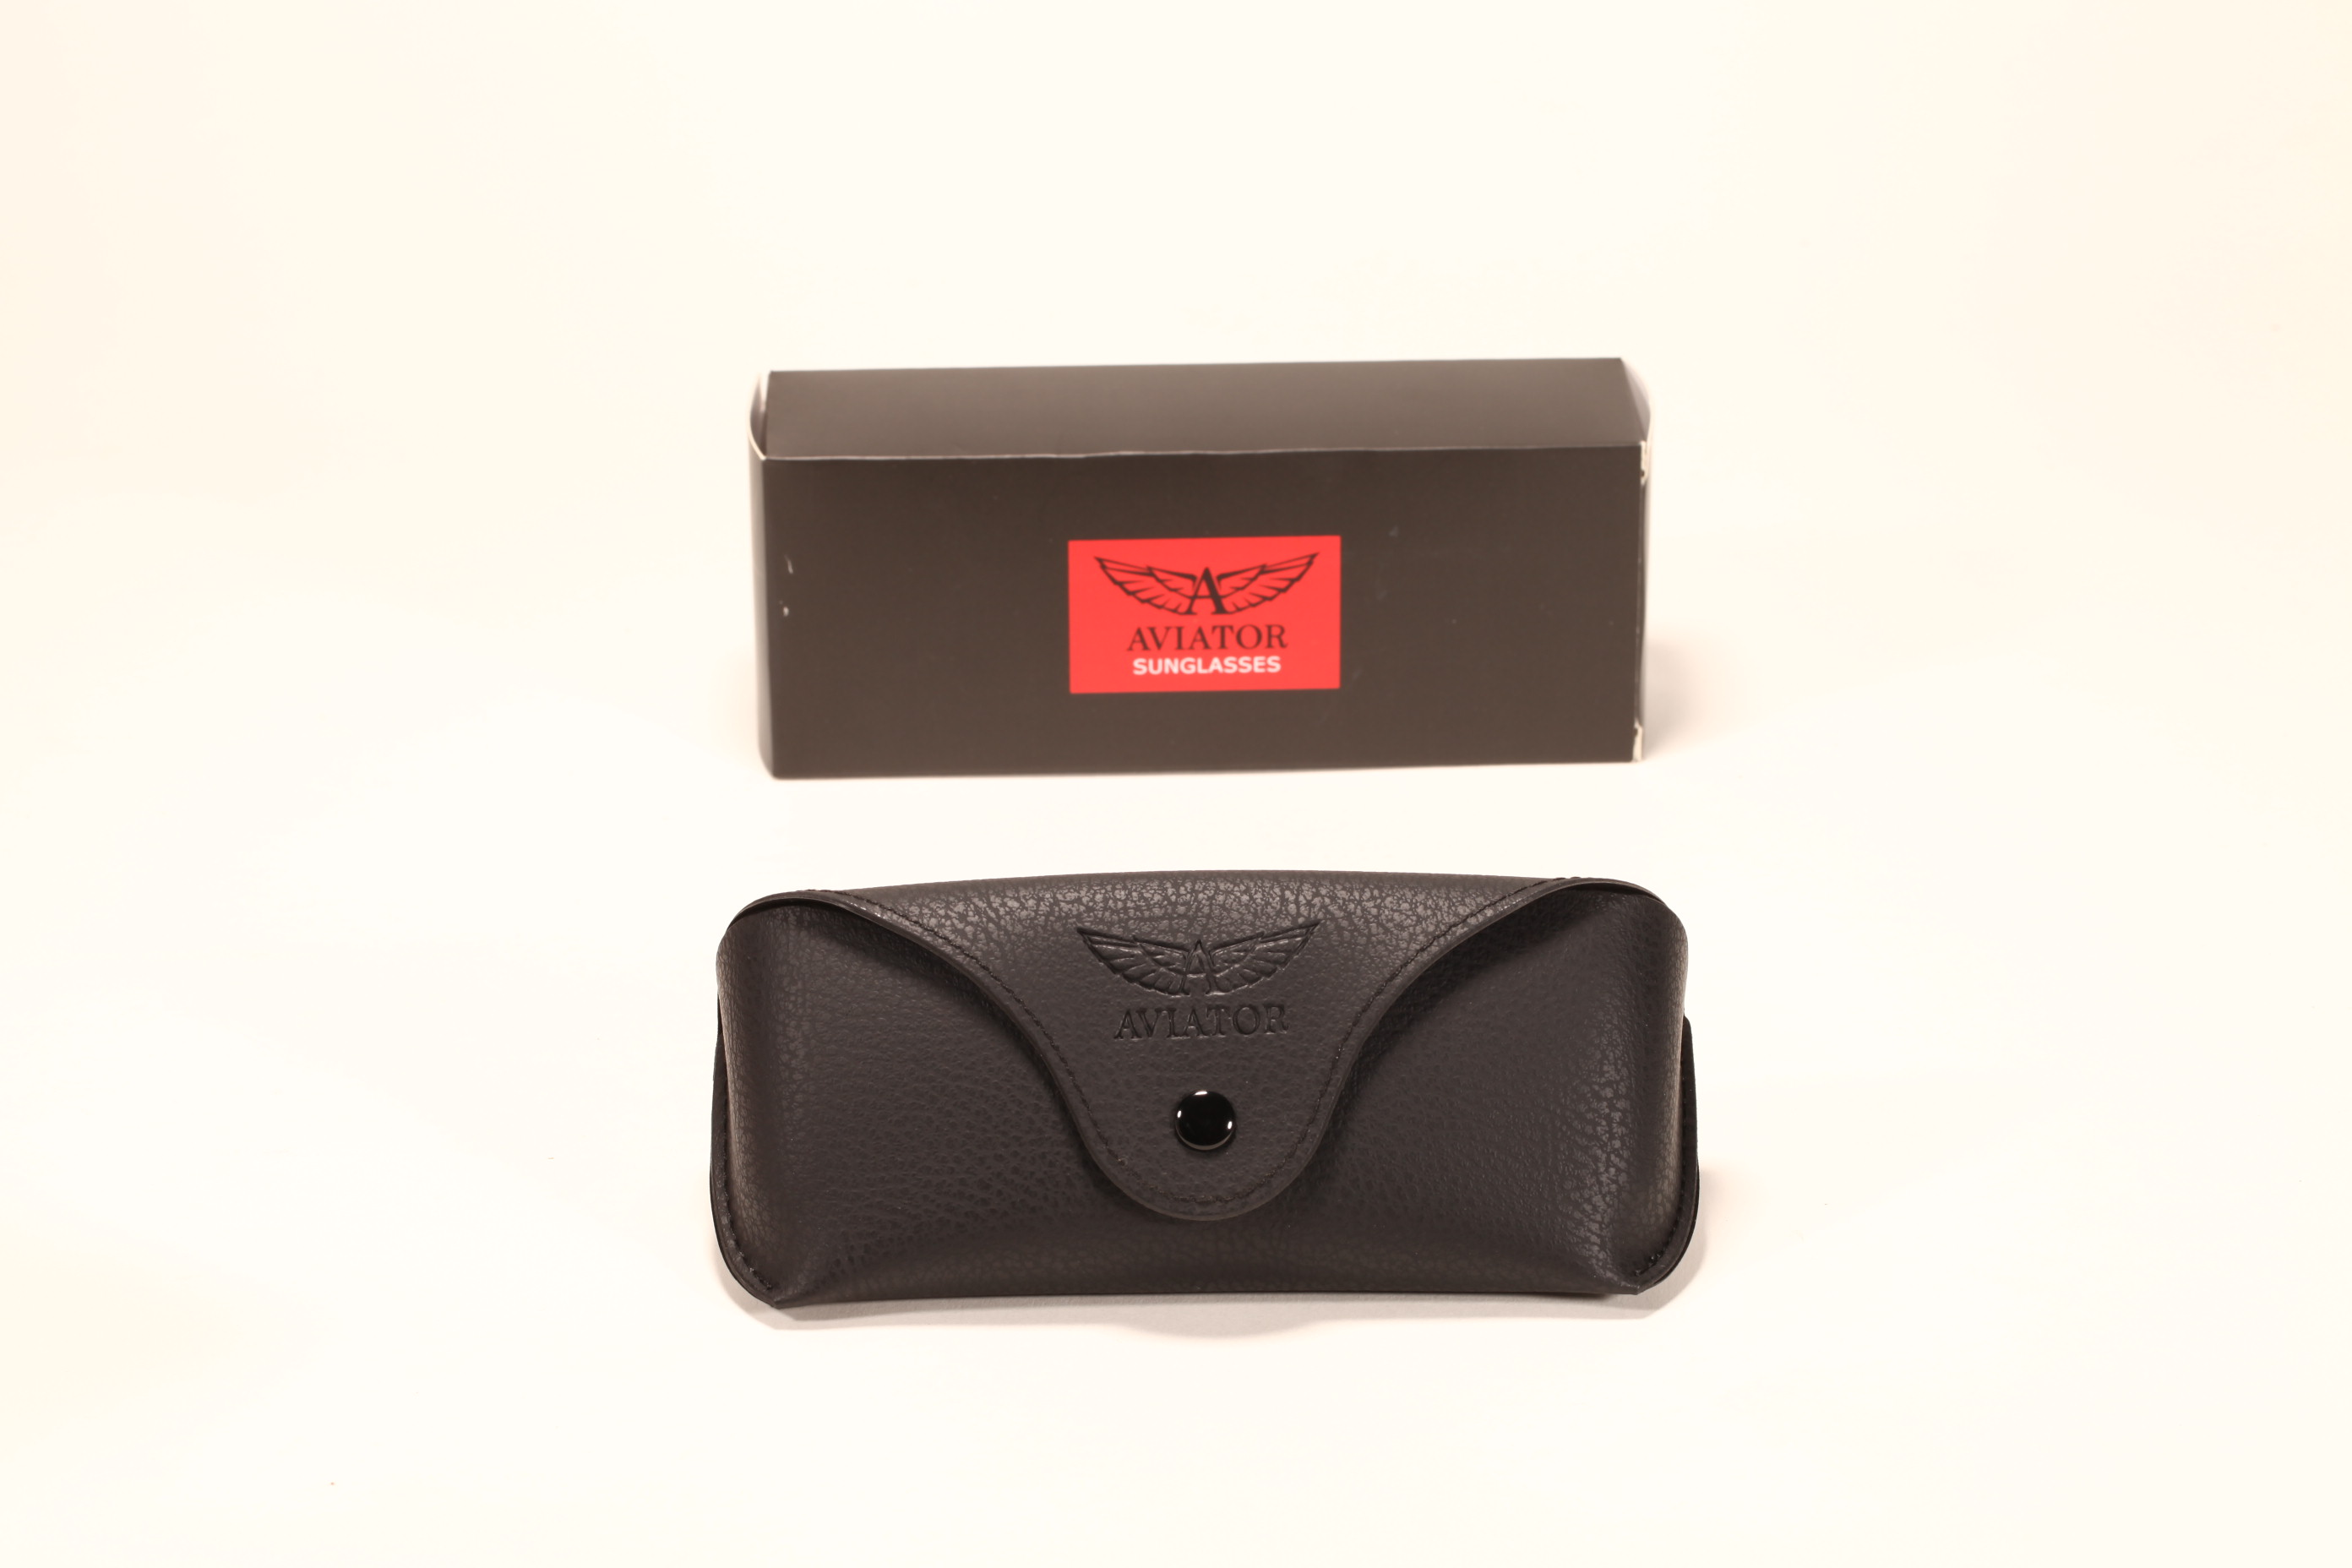 A black glasses case set, including a carton and a soft case